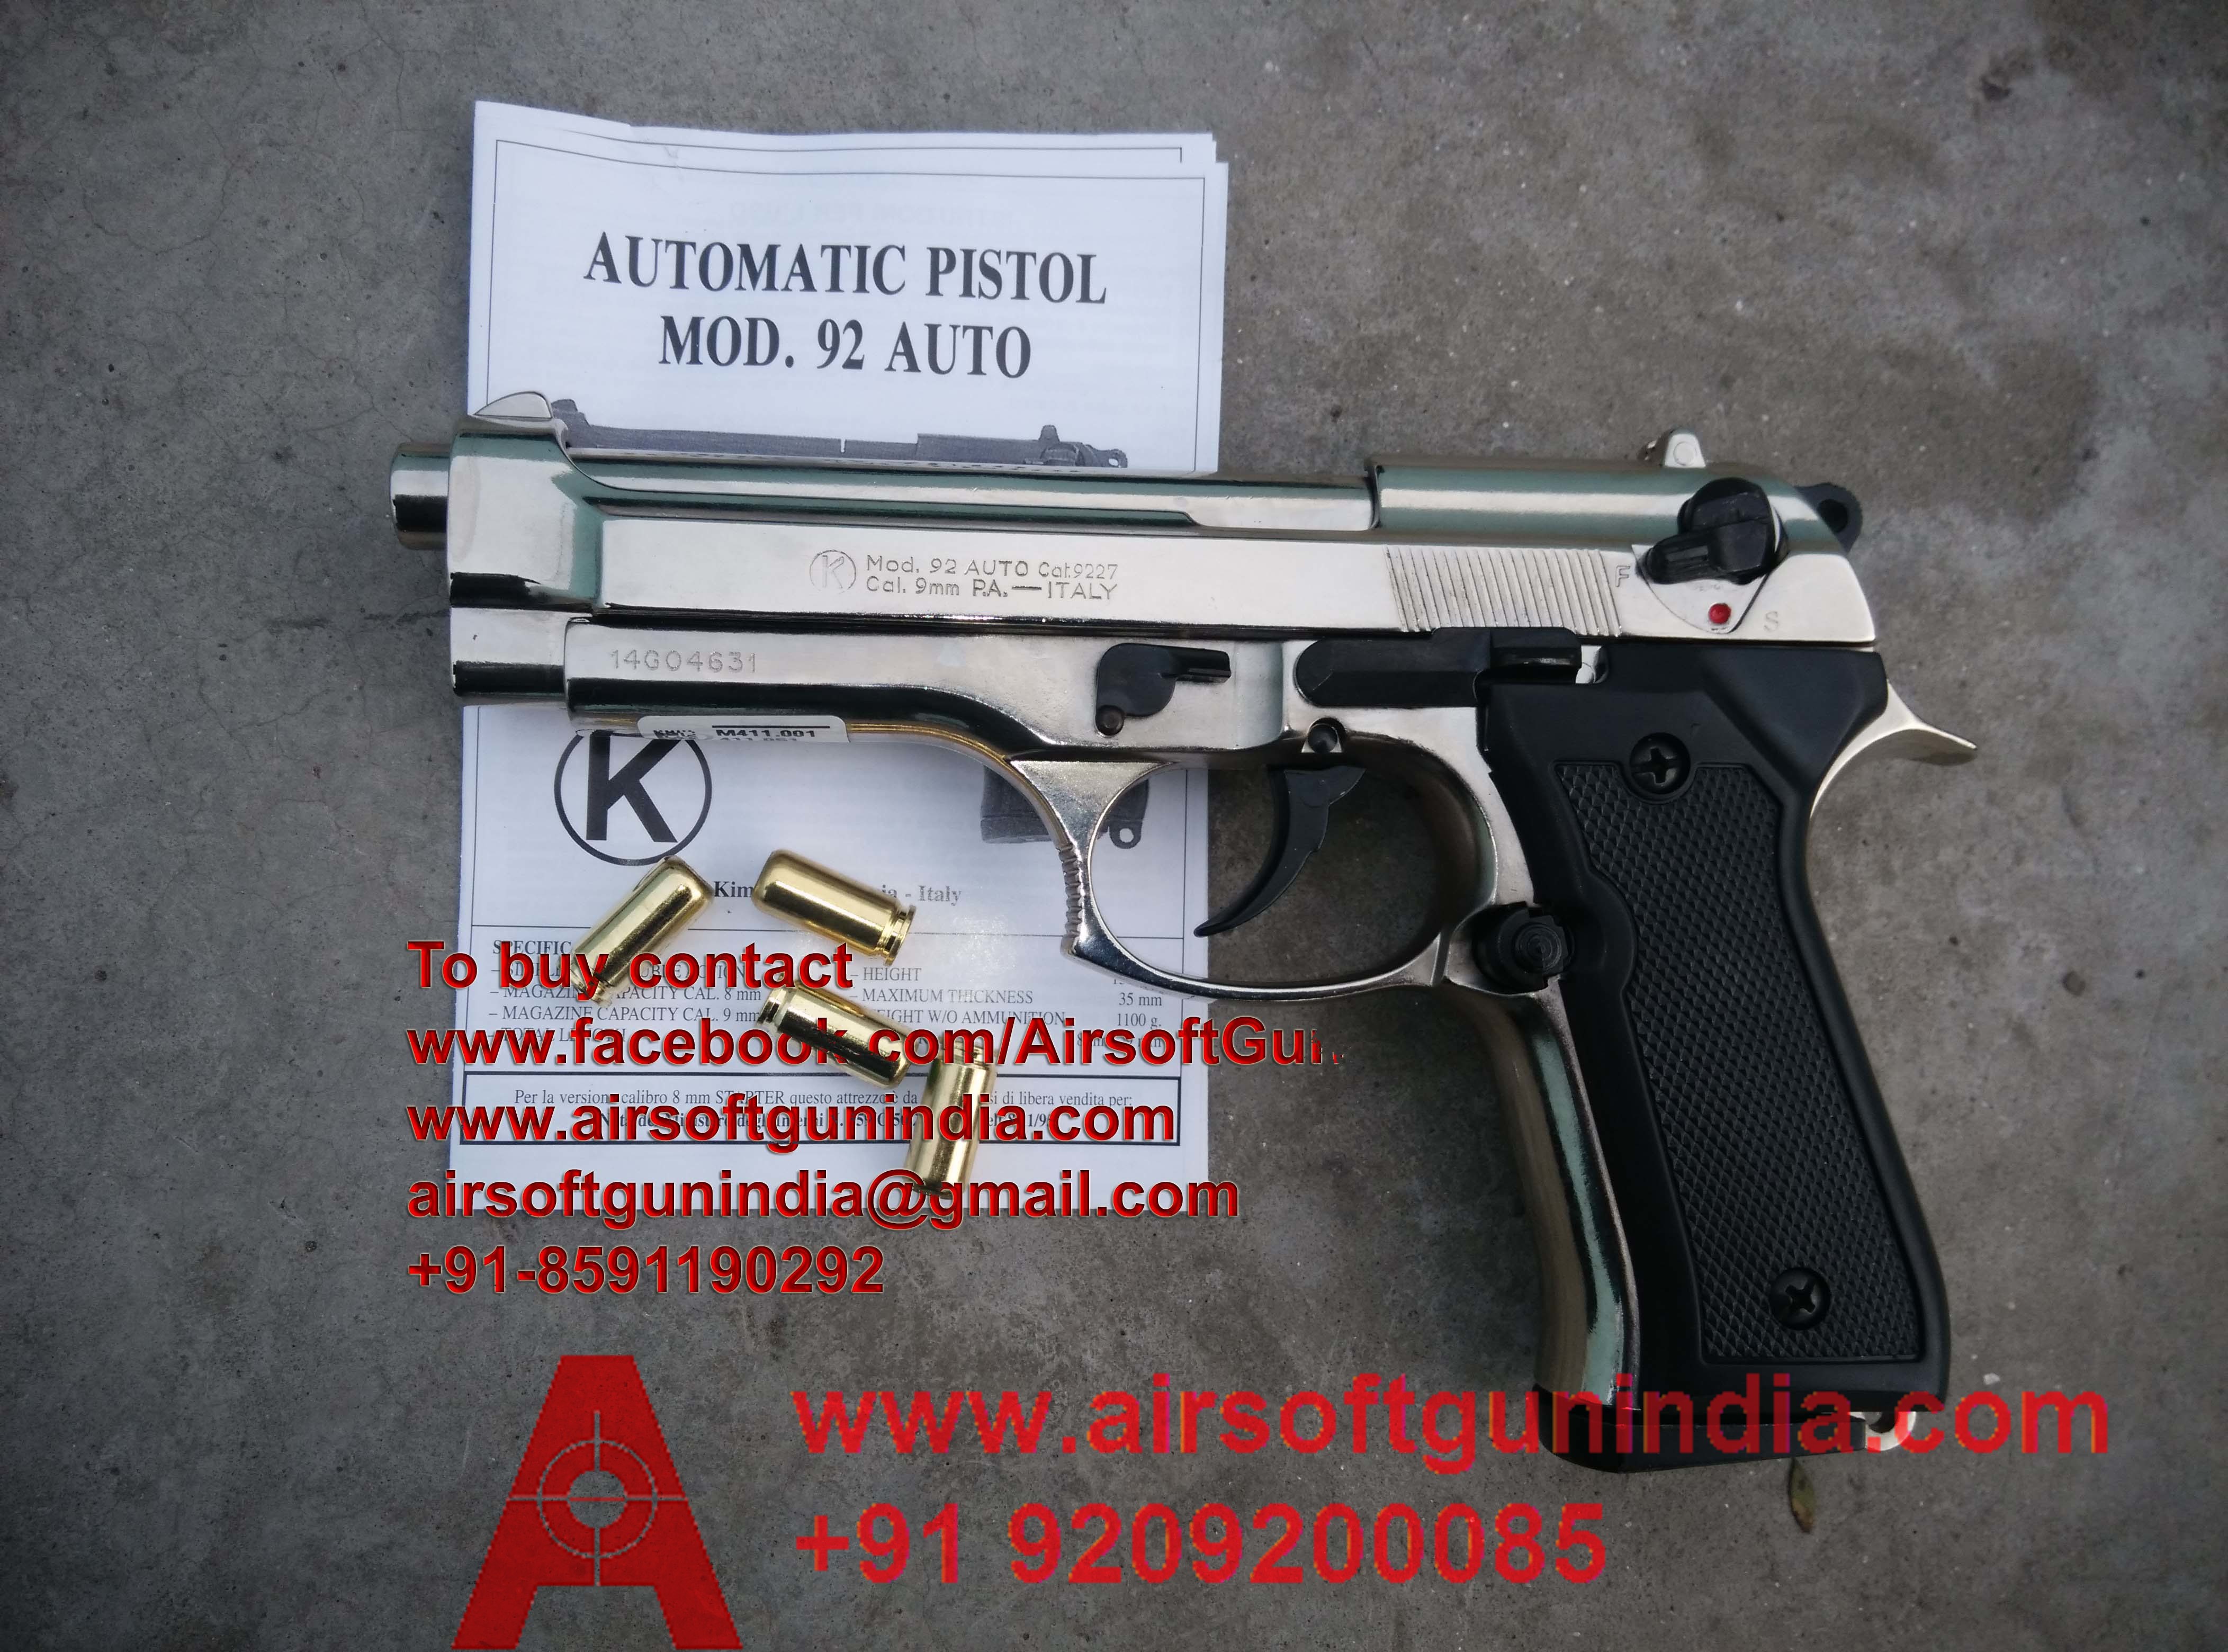 Beretta M92fs Based Kimar M92fs Front Firing Blank Gun In India(chrome)